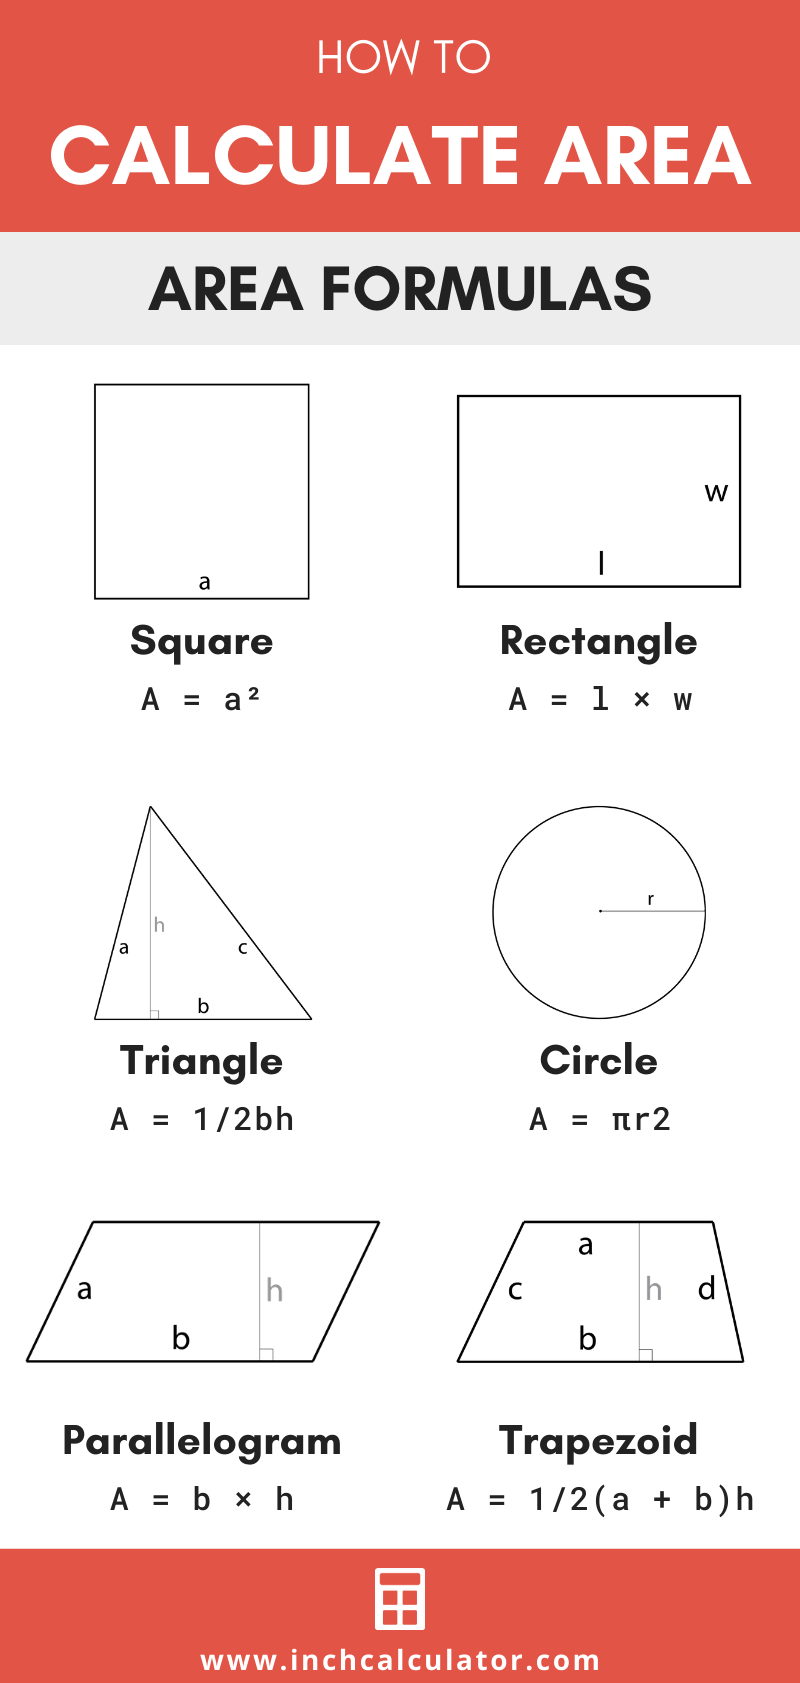 Area Calculator - Calculate Area of Various Shapes - Inch Calculator